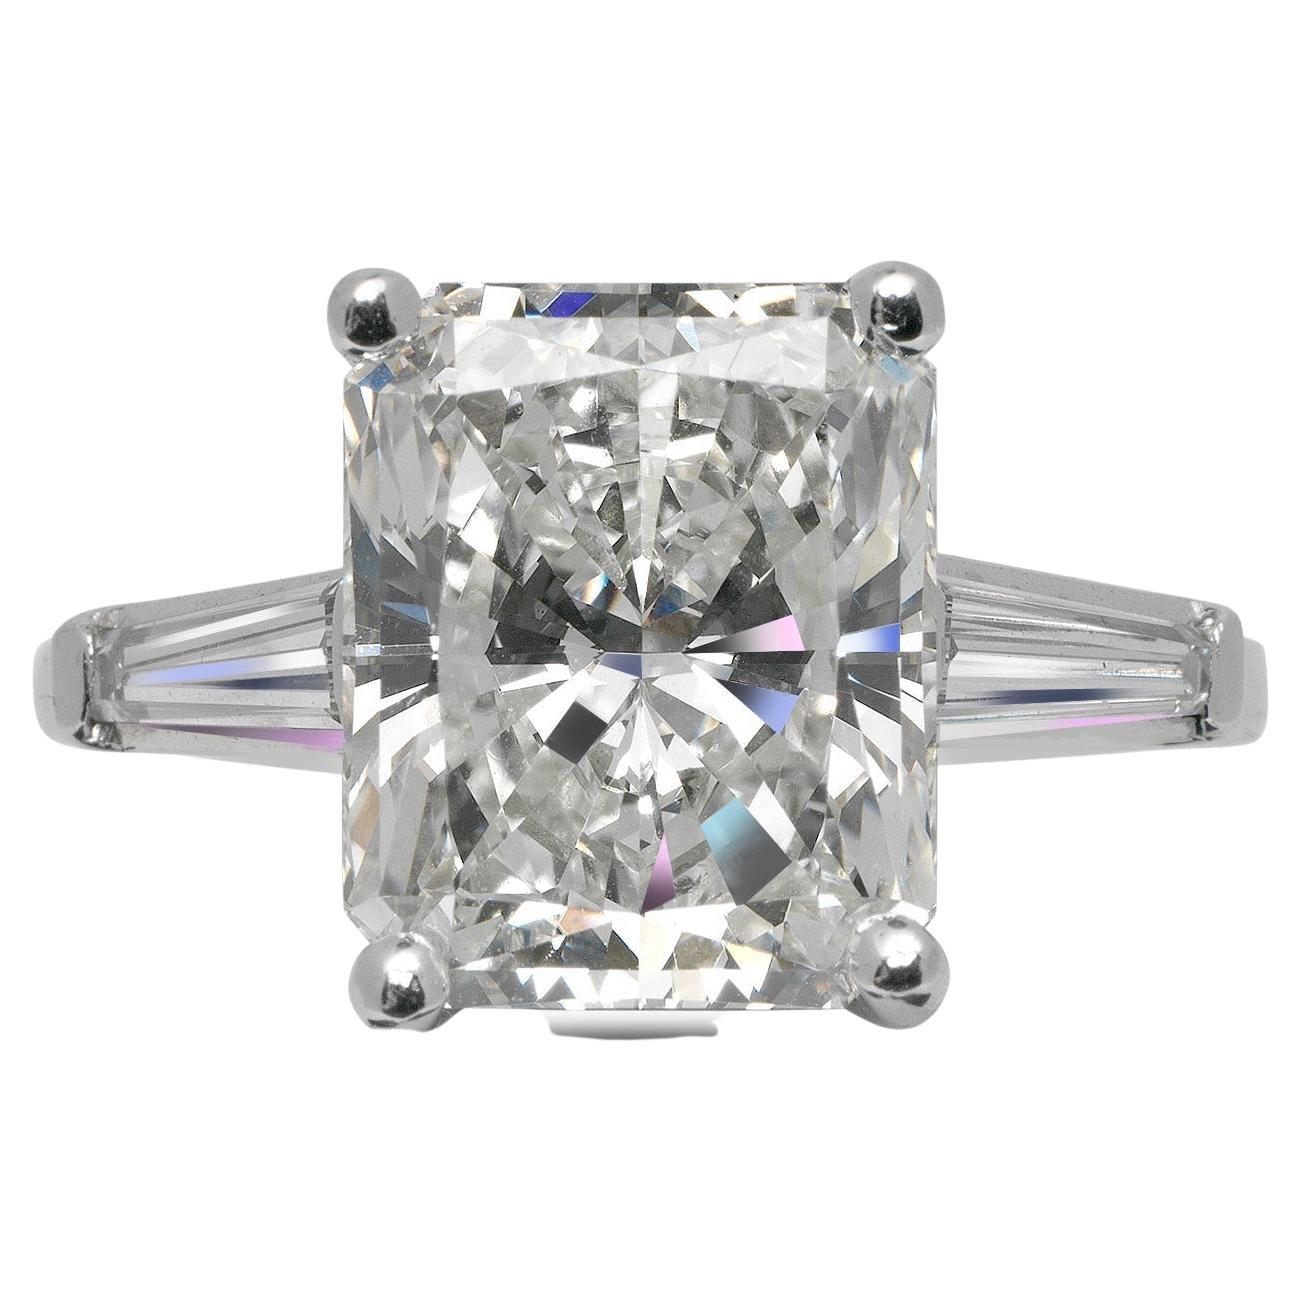 5 Carat Radiant Cut Diamond Engagement Ring GIA Certified I VS2